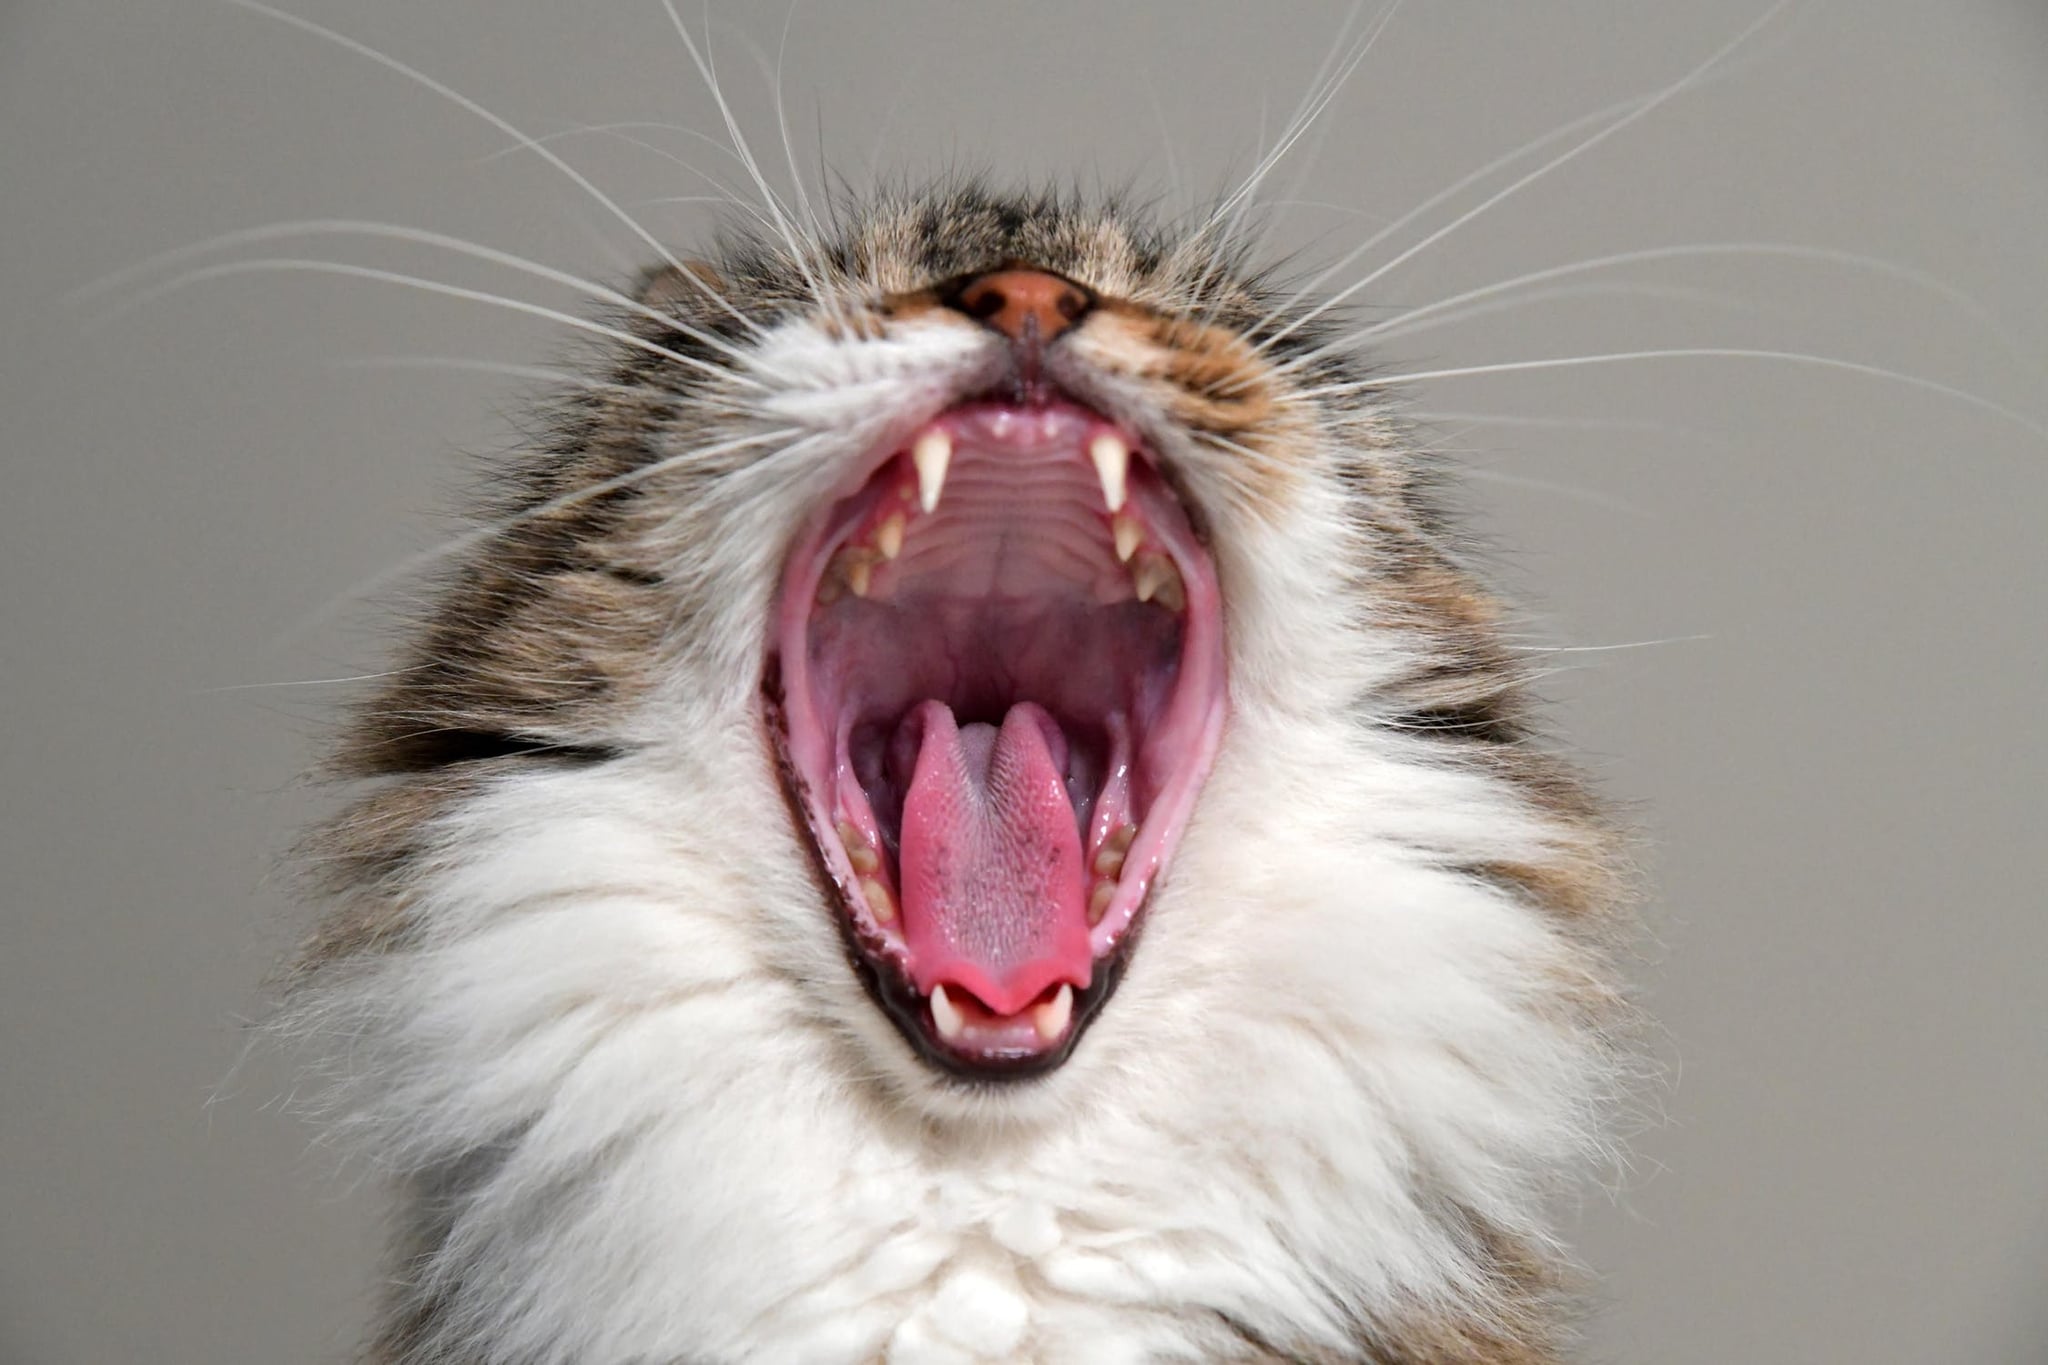 tmp_sobgnX_7d4c2fc27991ed95_cat_yawning.jpeg